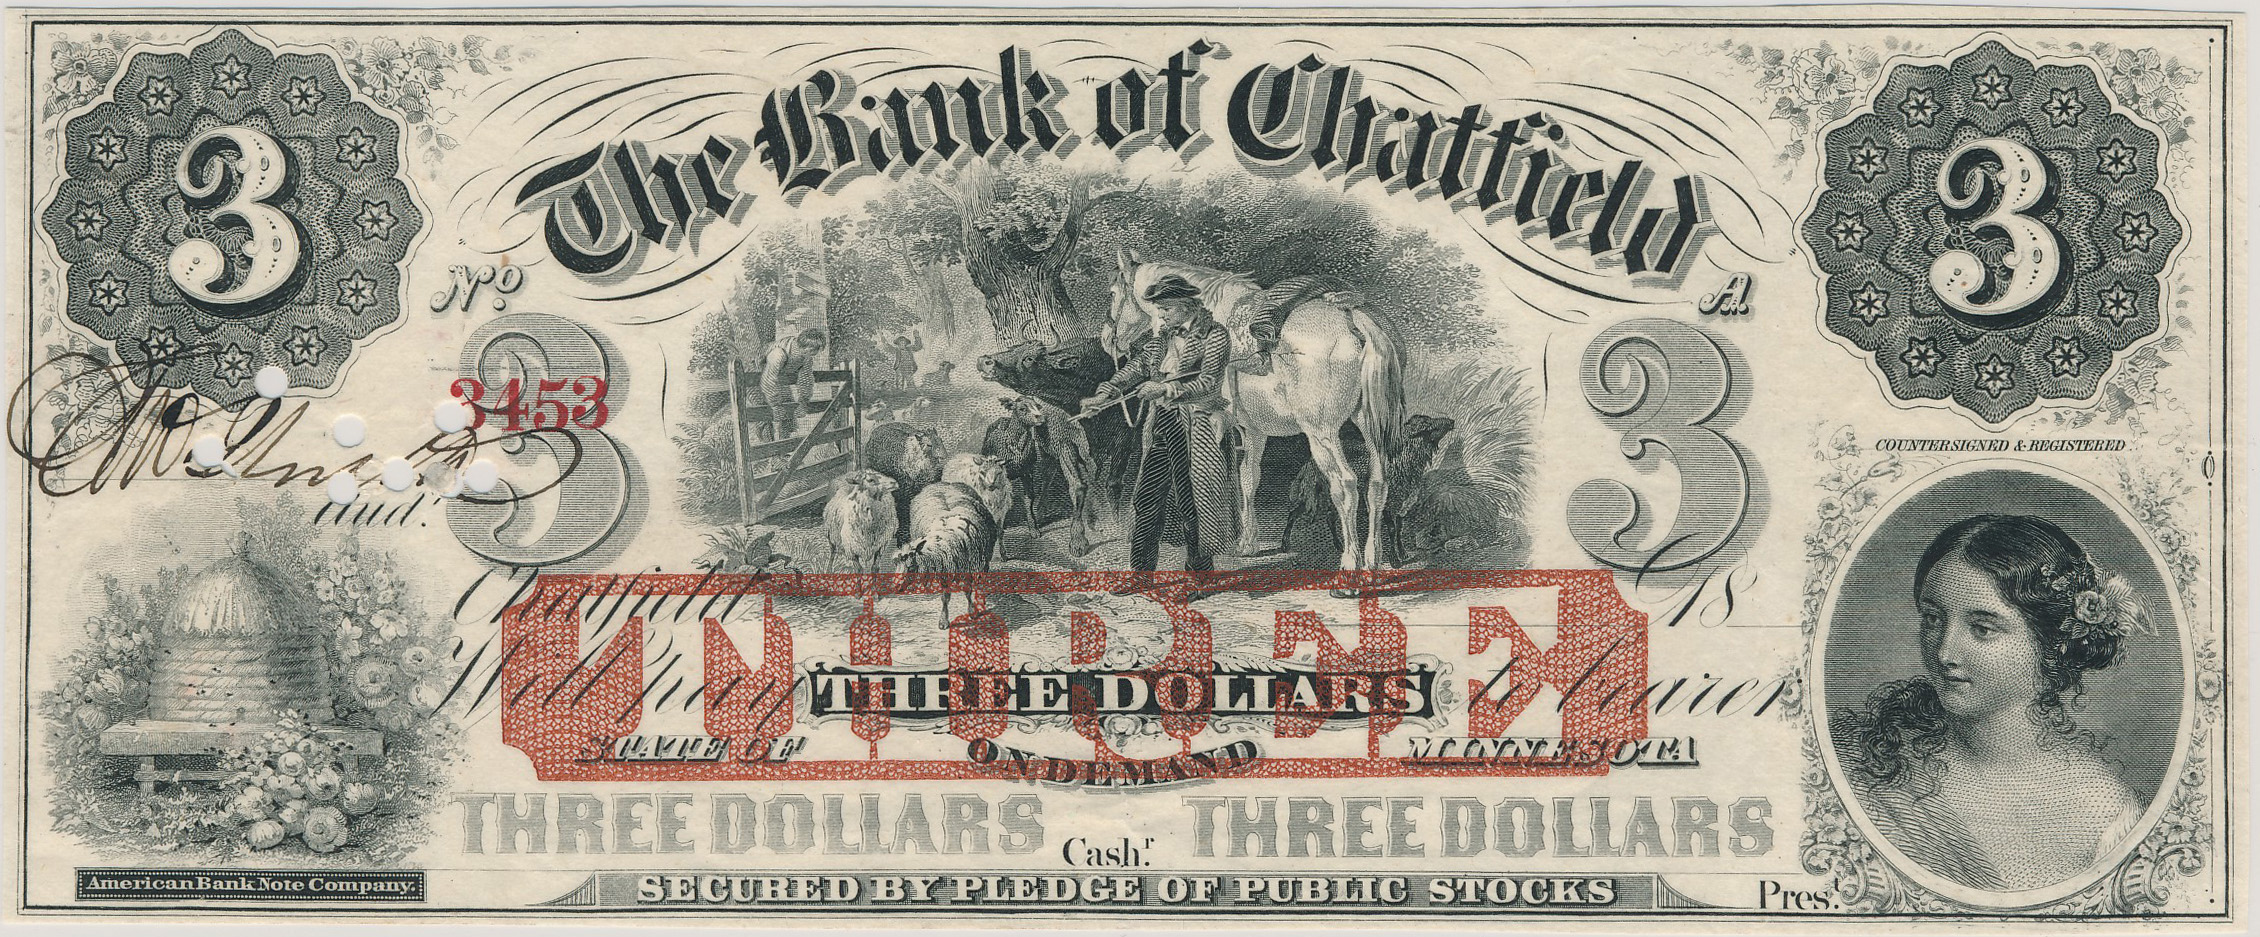 Bank of Chatfield